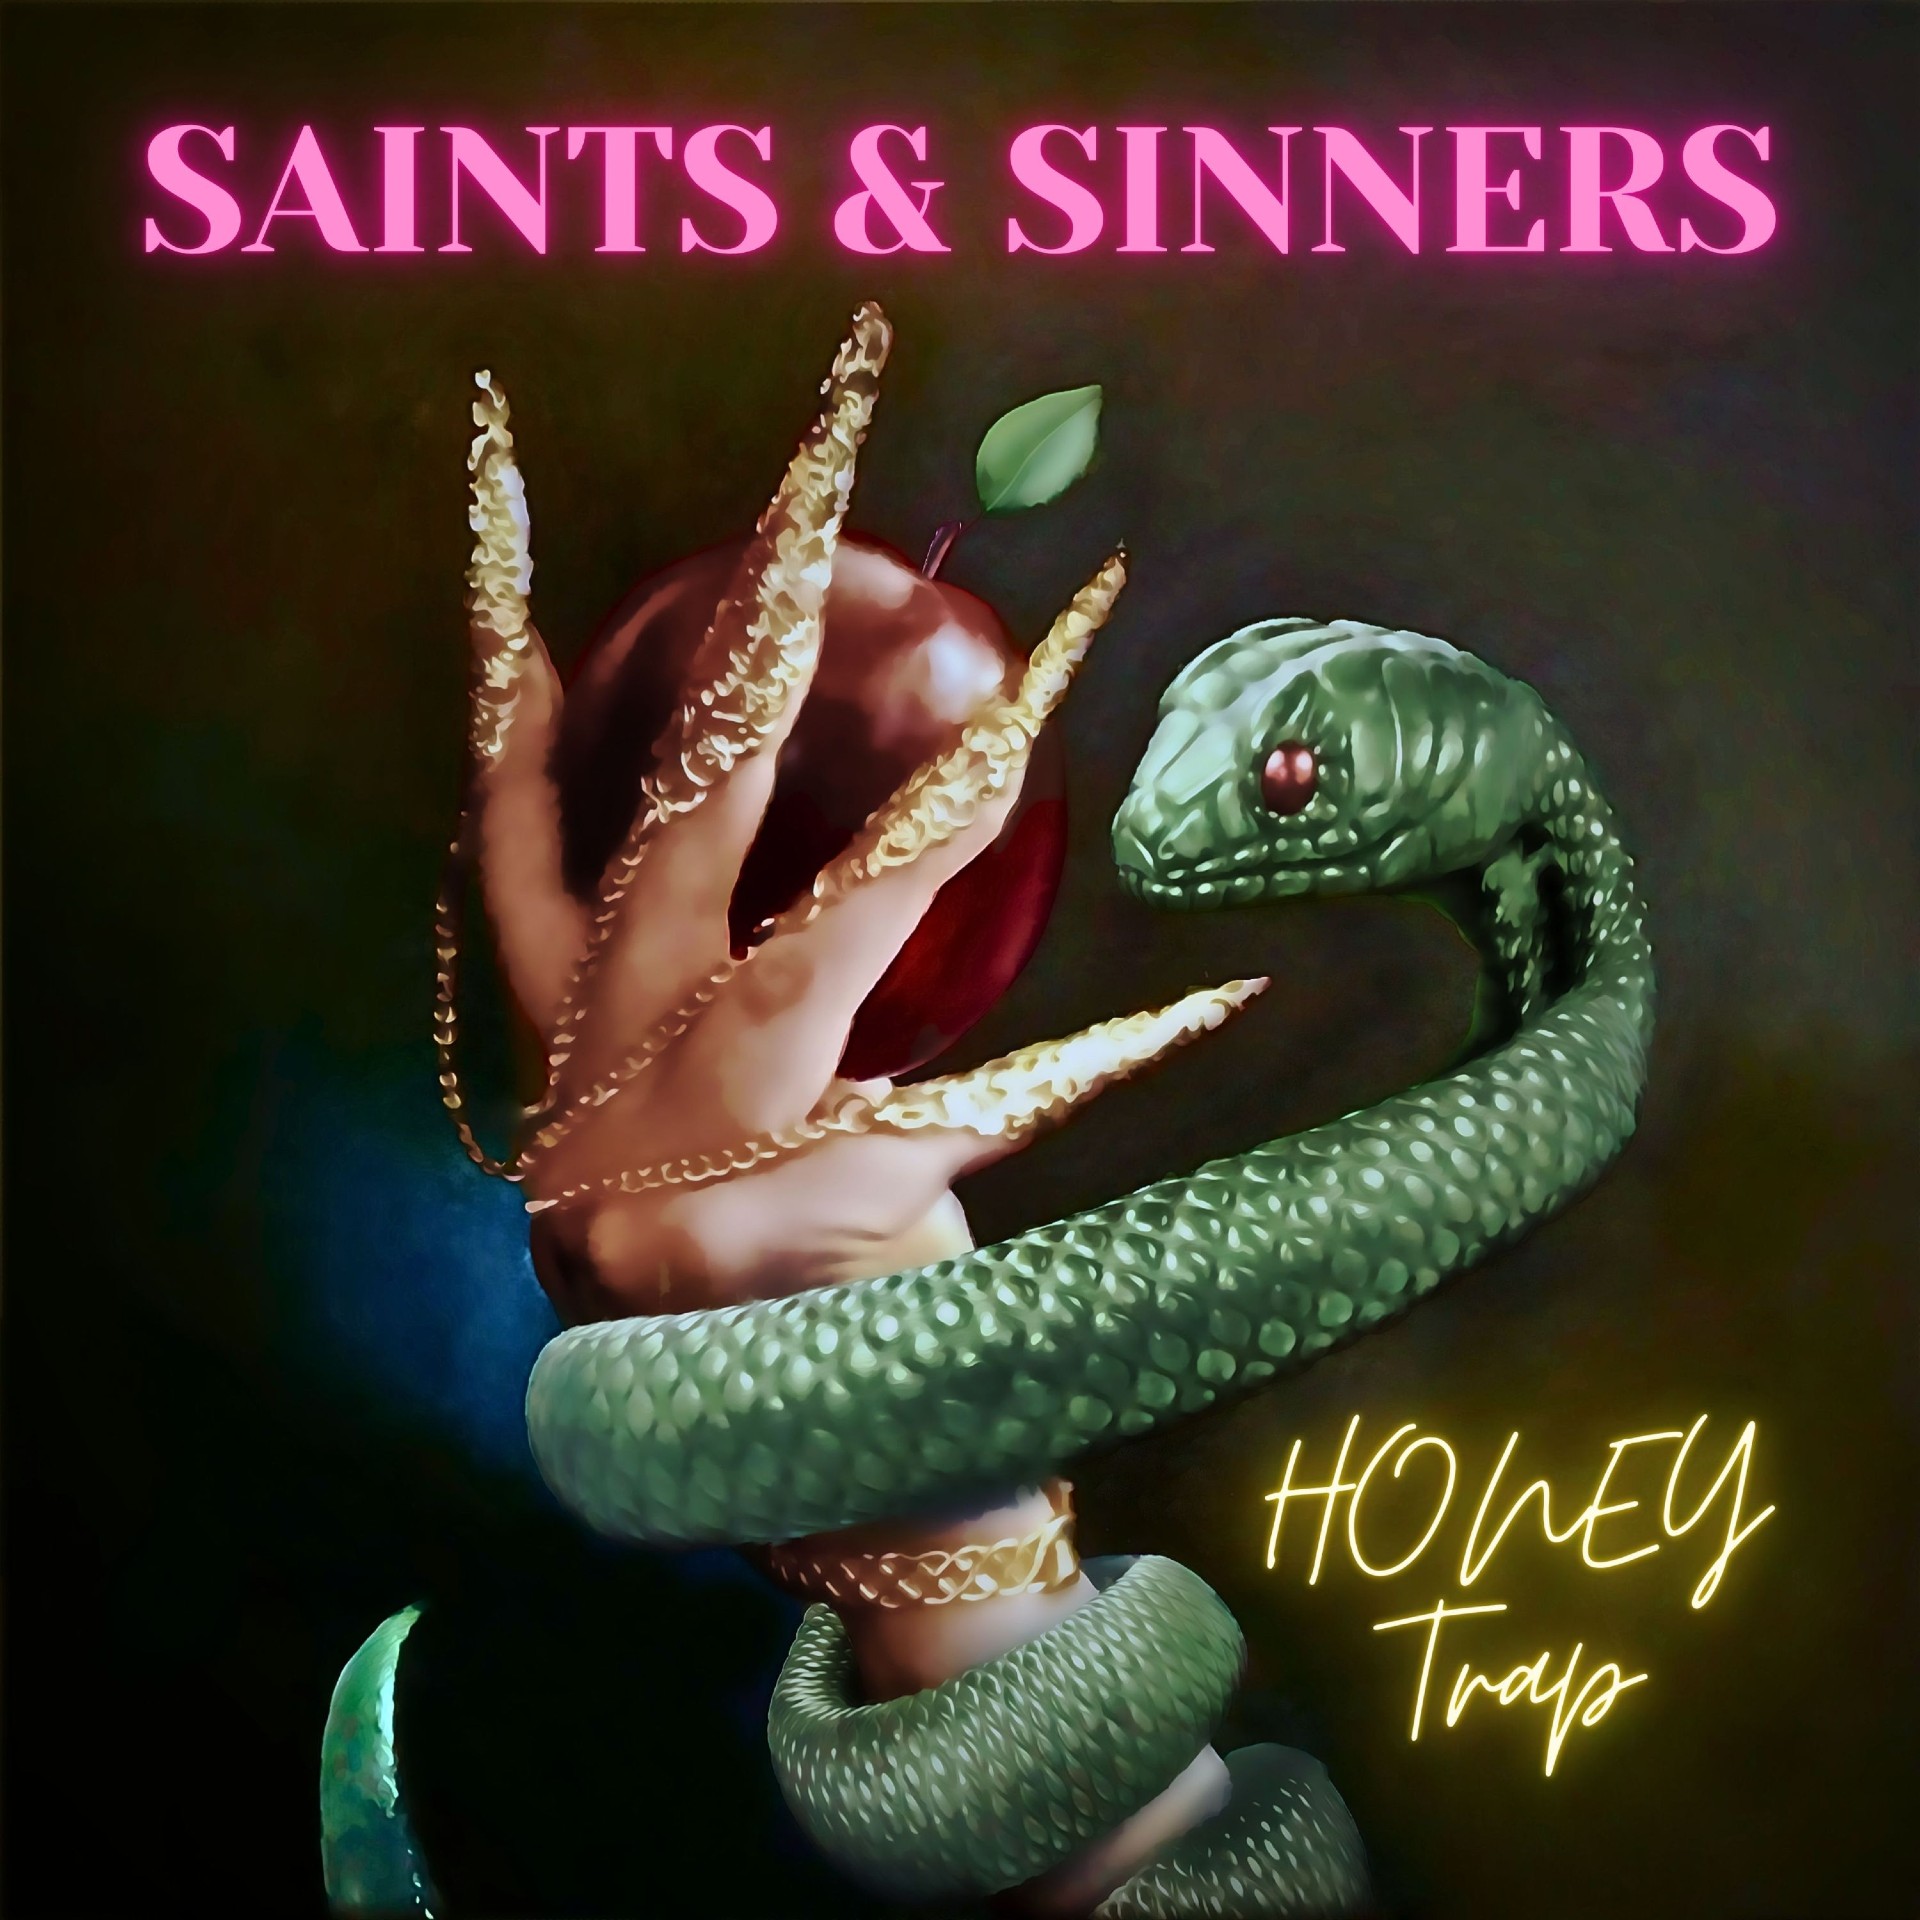 Honey Trap “Saints and Sinners” single artwork